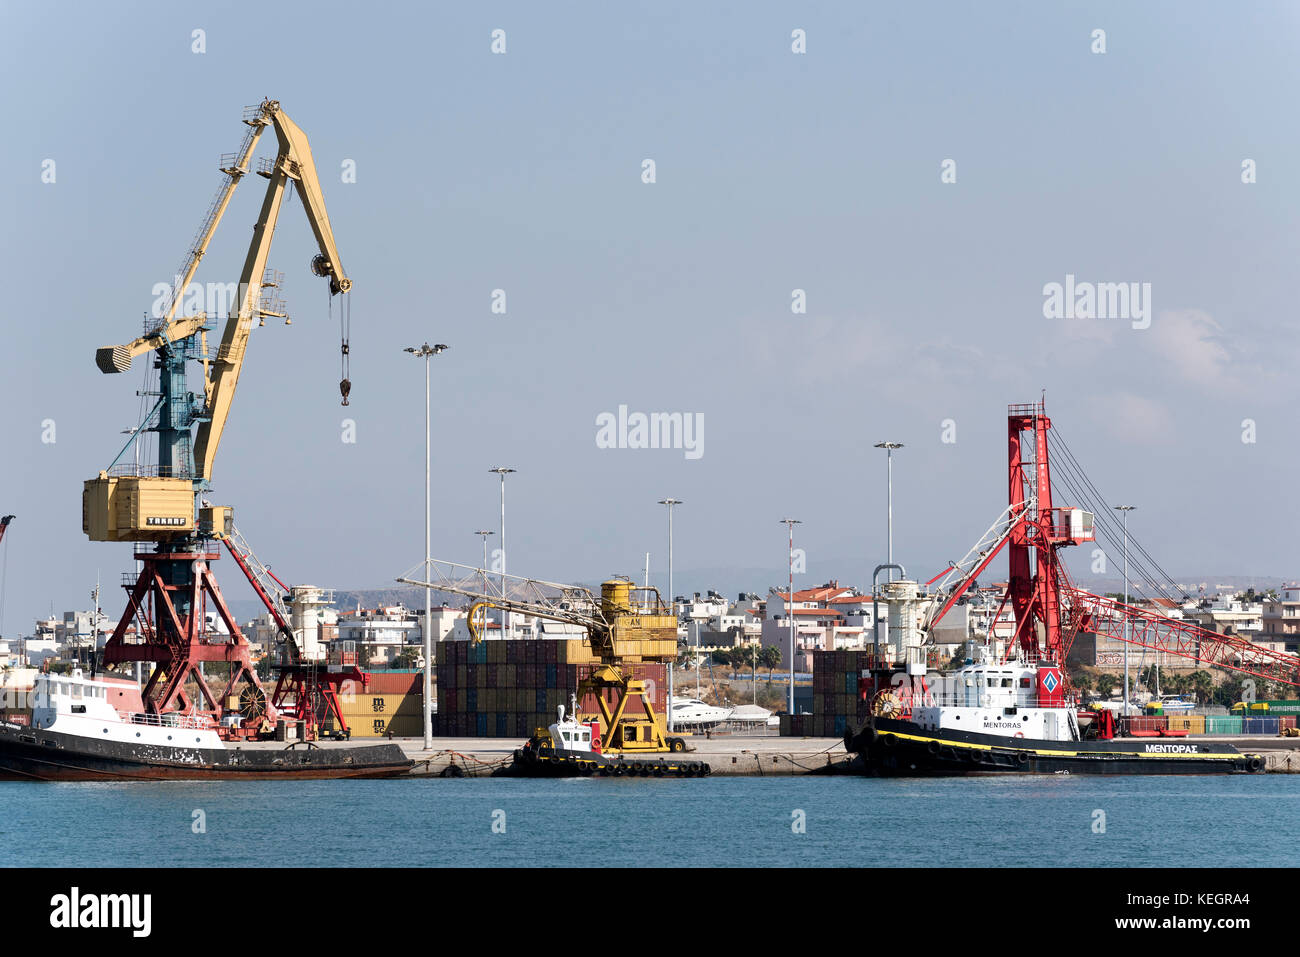 The Port of Heraklion, Crete, Greece, October 2017. Cranes line the waterfront. Stock Photo